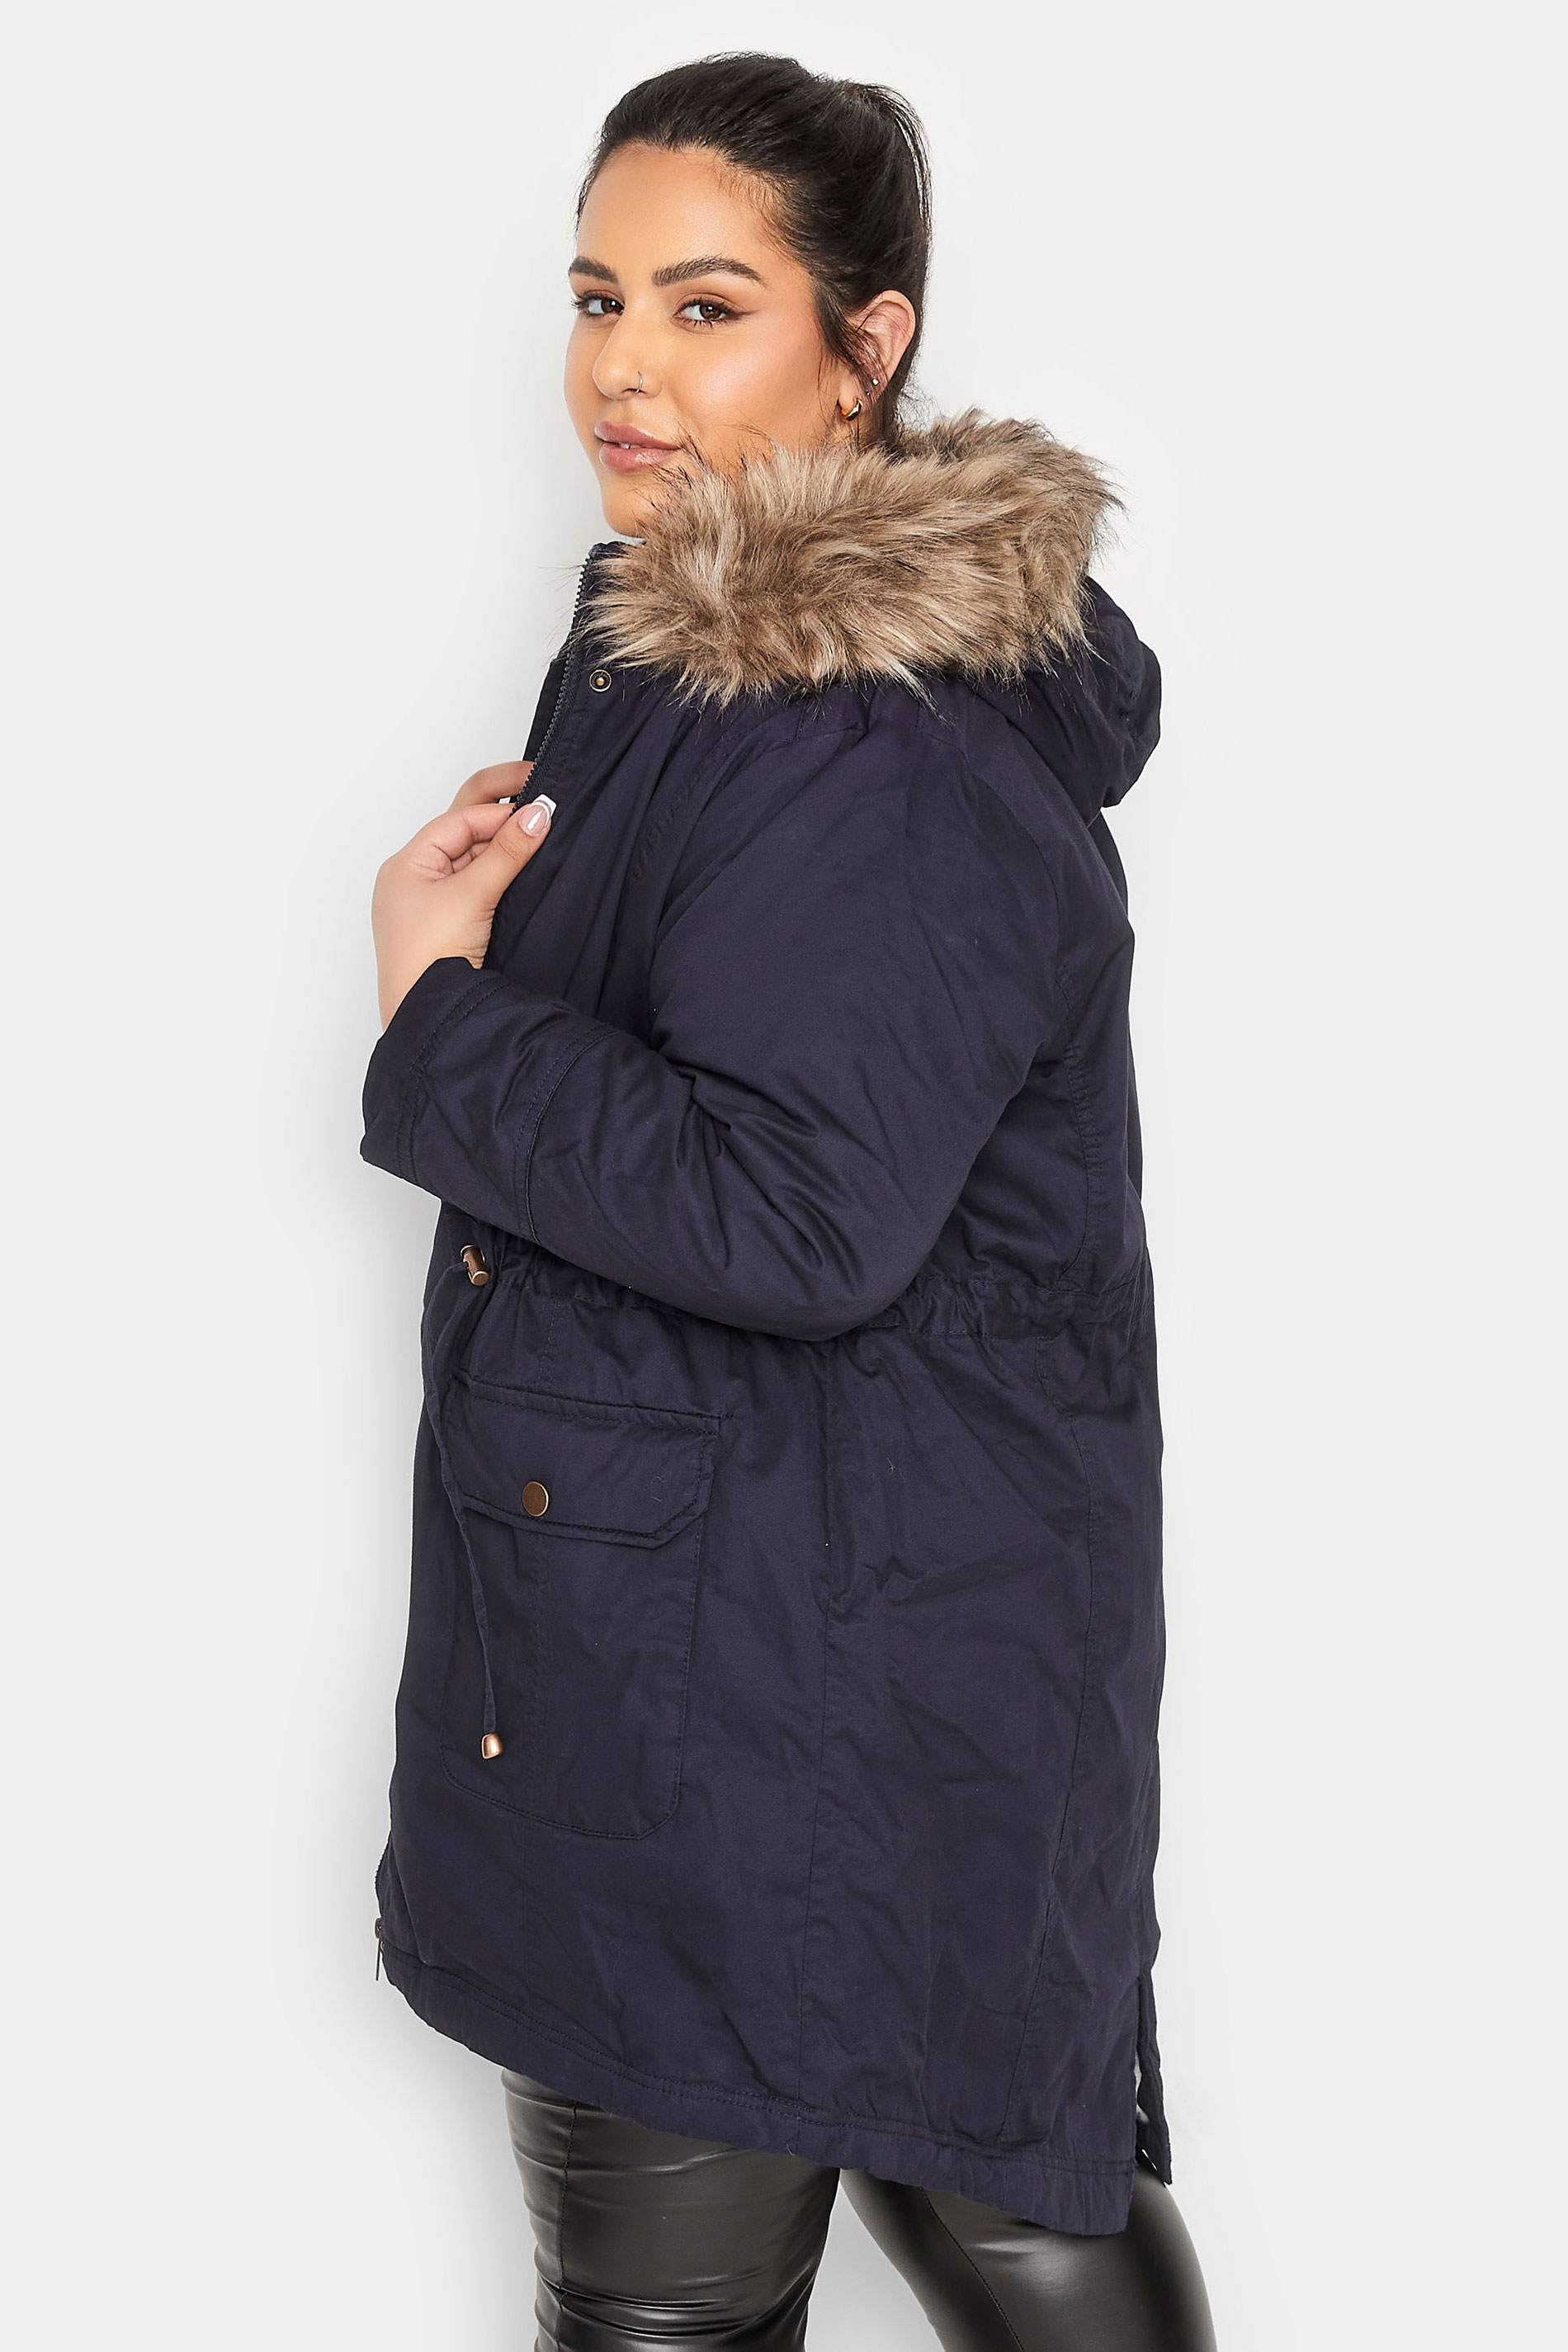 YOURS PETITE Plus Size Navy Blue Faux Fur Trim Hooded Parka Coat | Yours Clothing 3